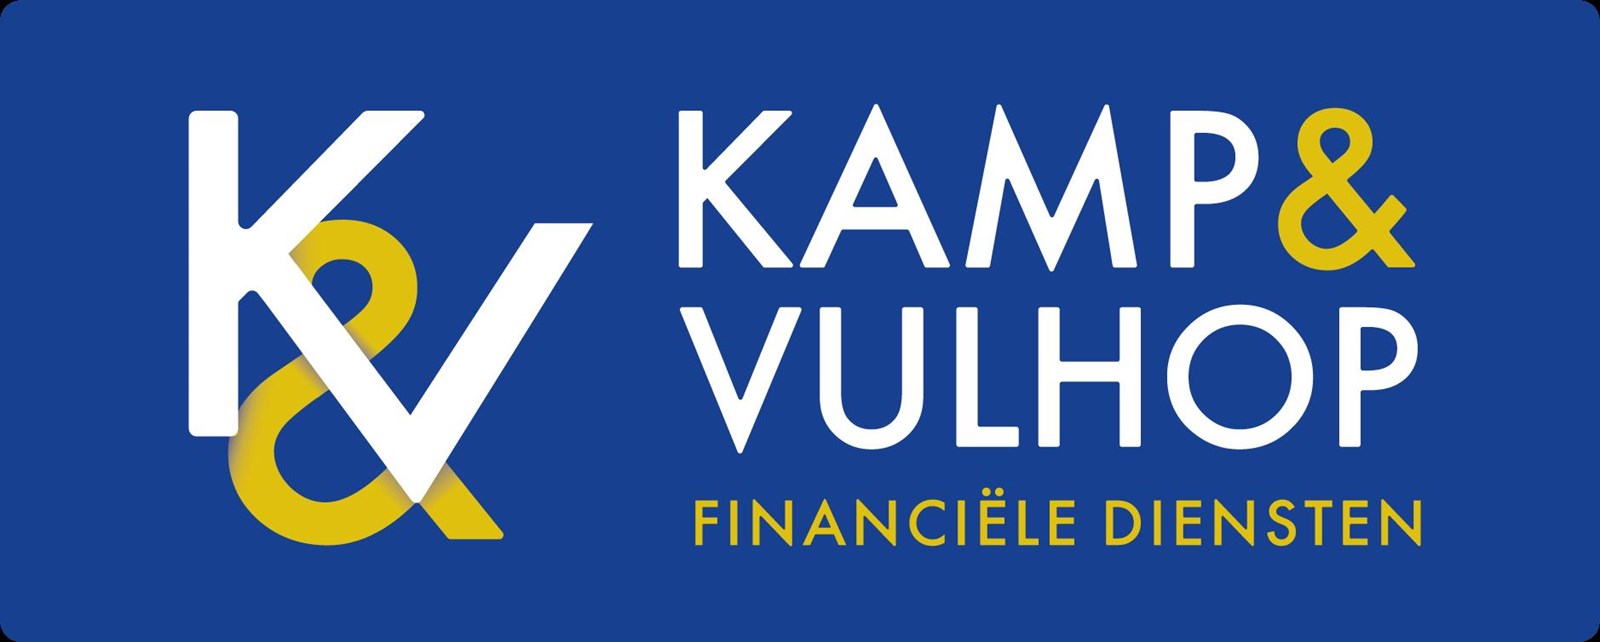 Afbeelding van Kamp & Vulhop Financiële Diensten